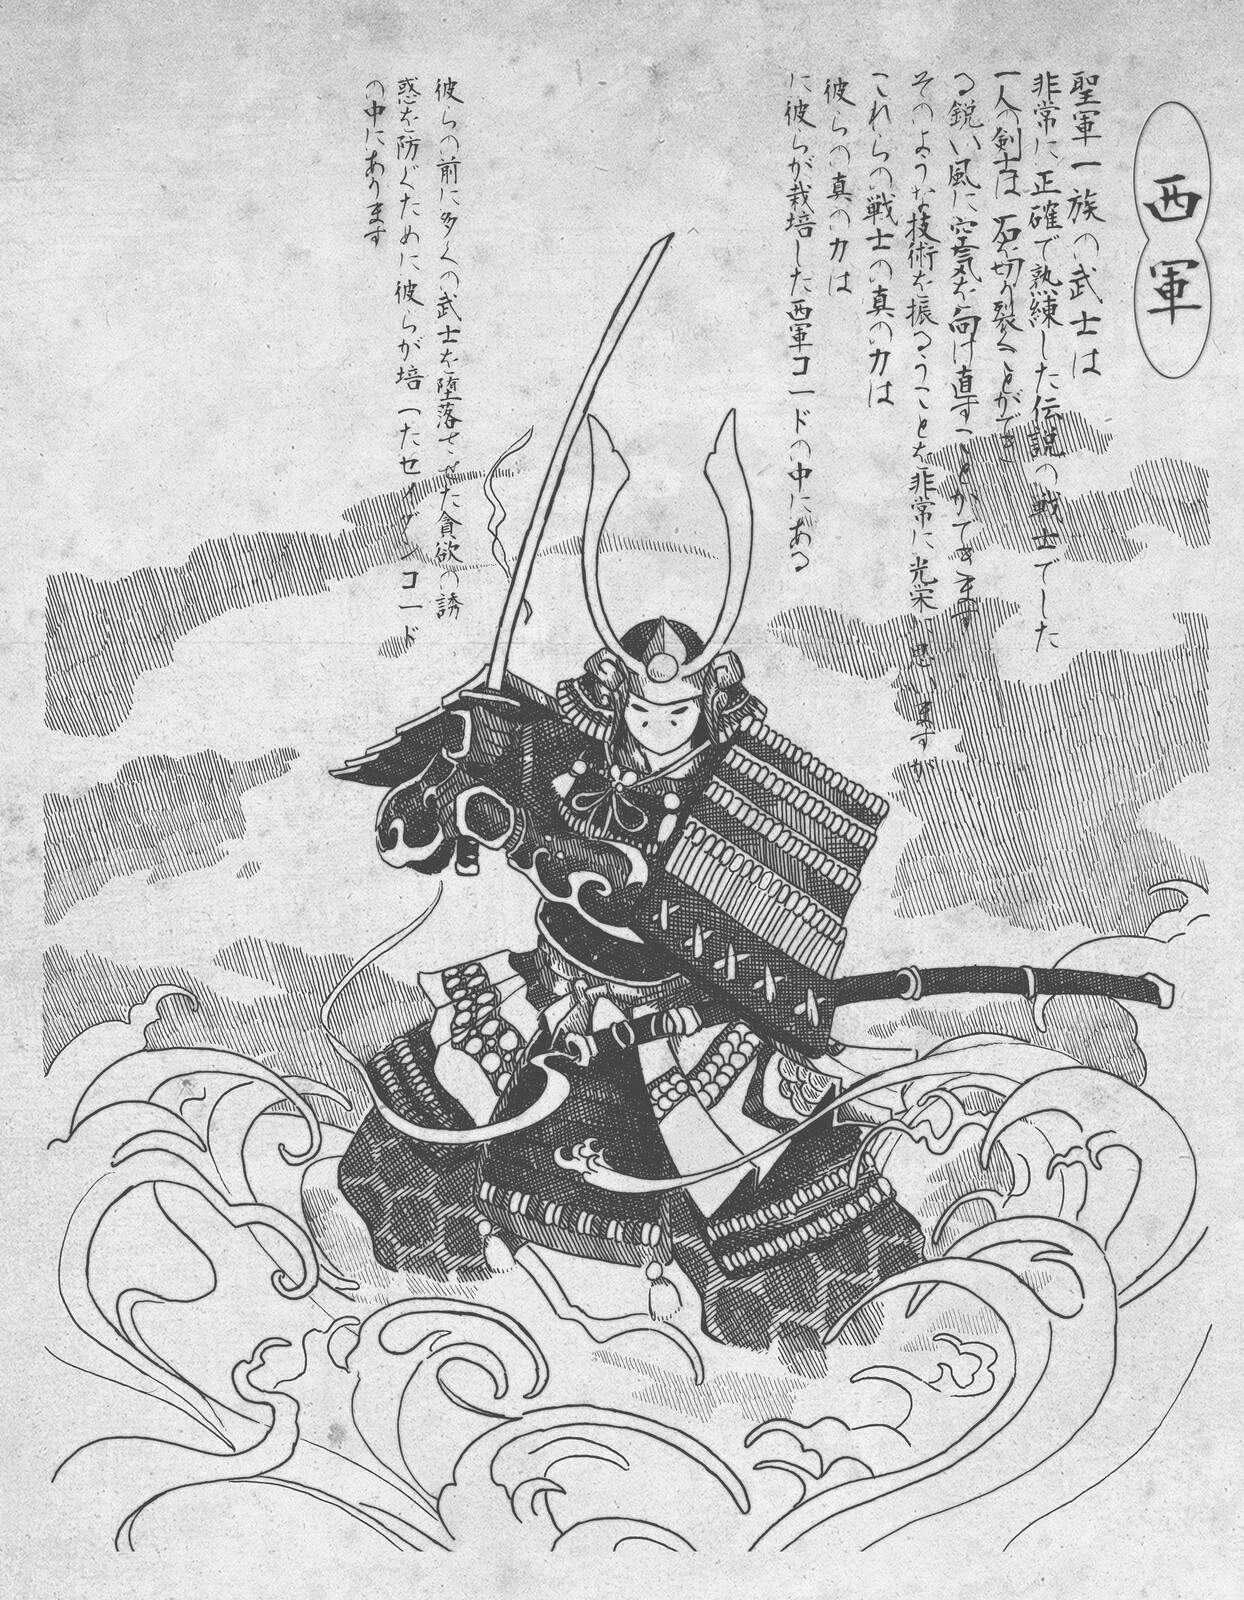 History of The Seigun Samurai (Smoking Serpents)